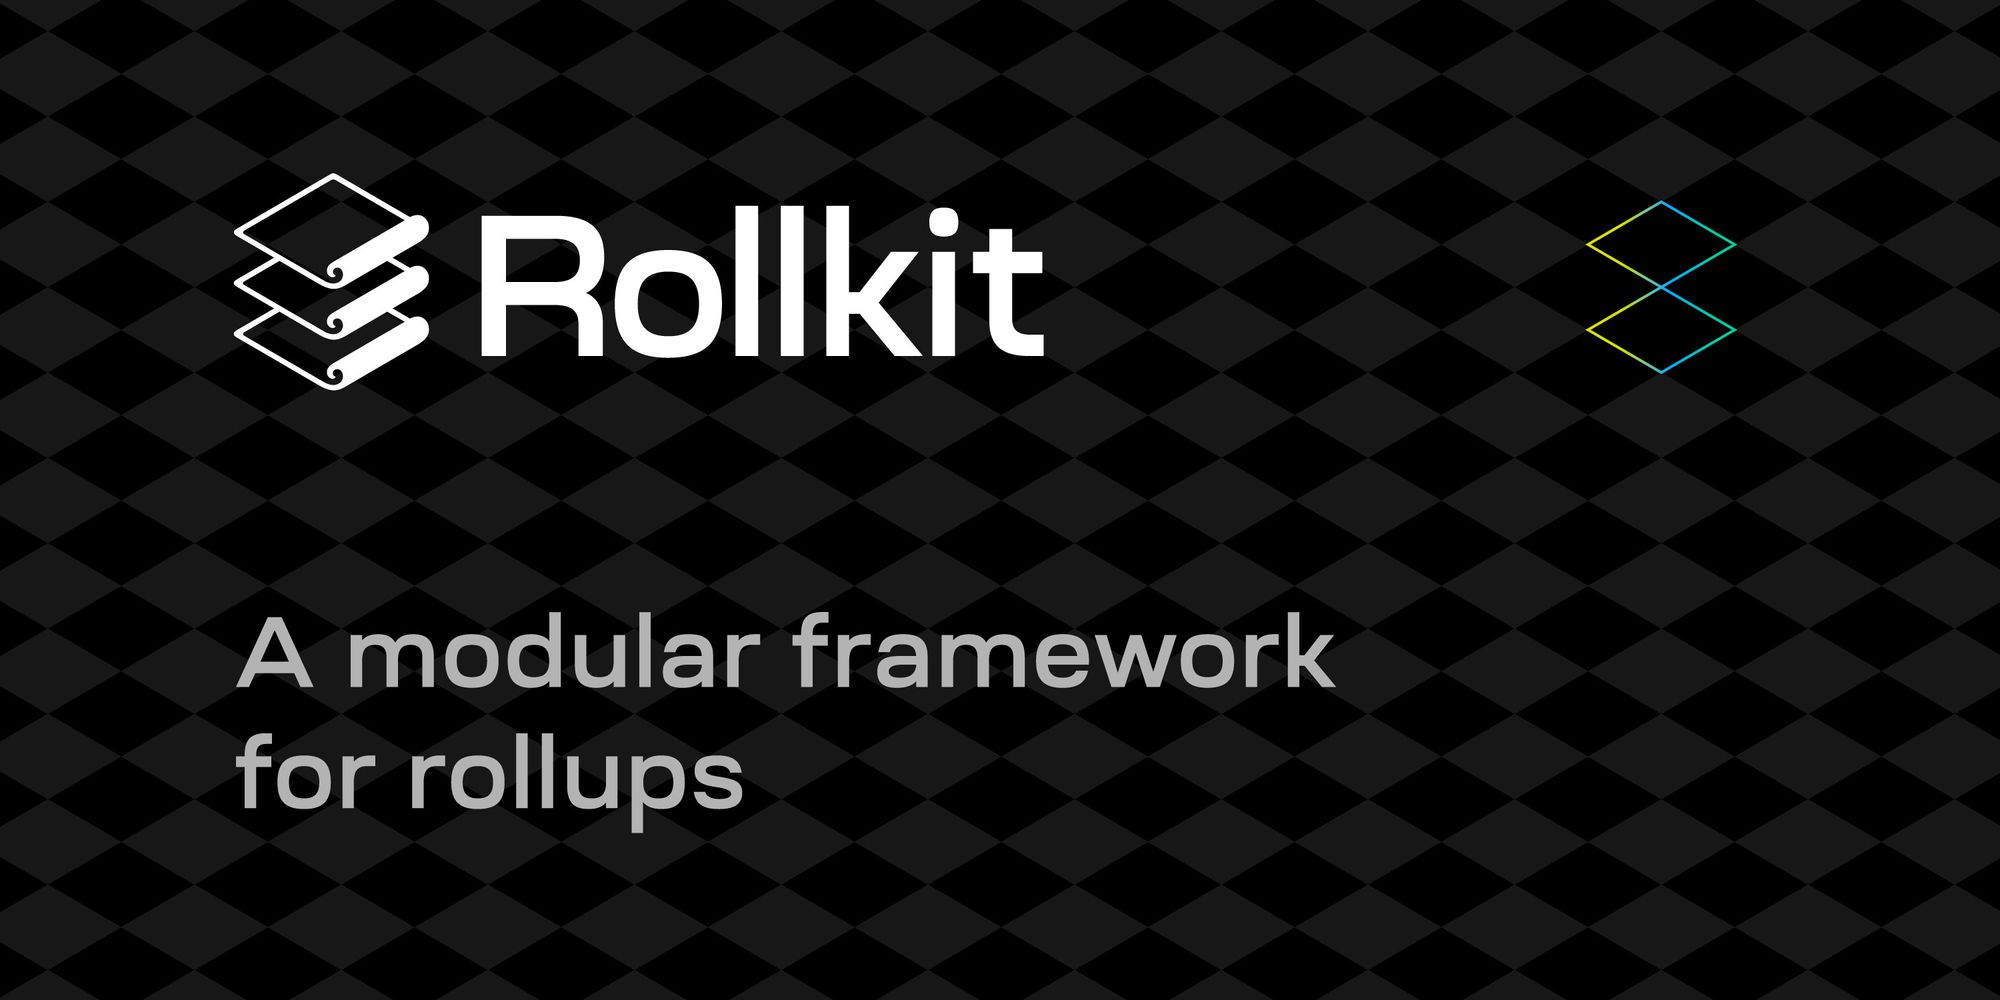 Introducing Rollkit: a modular rollup framework